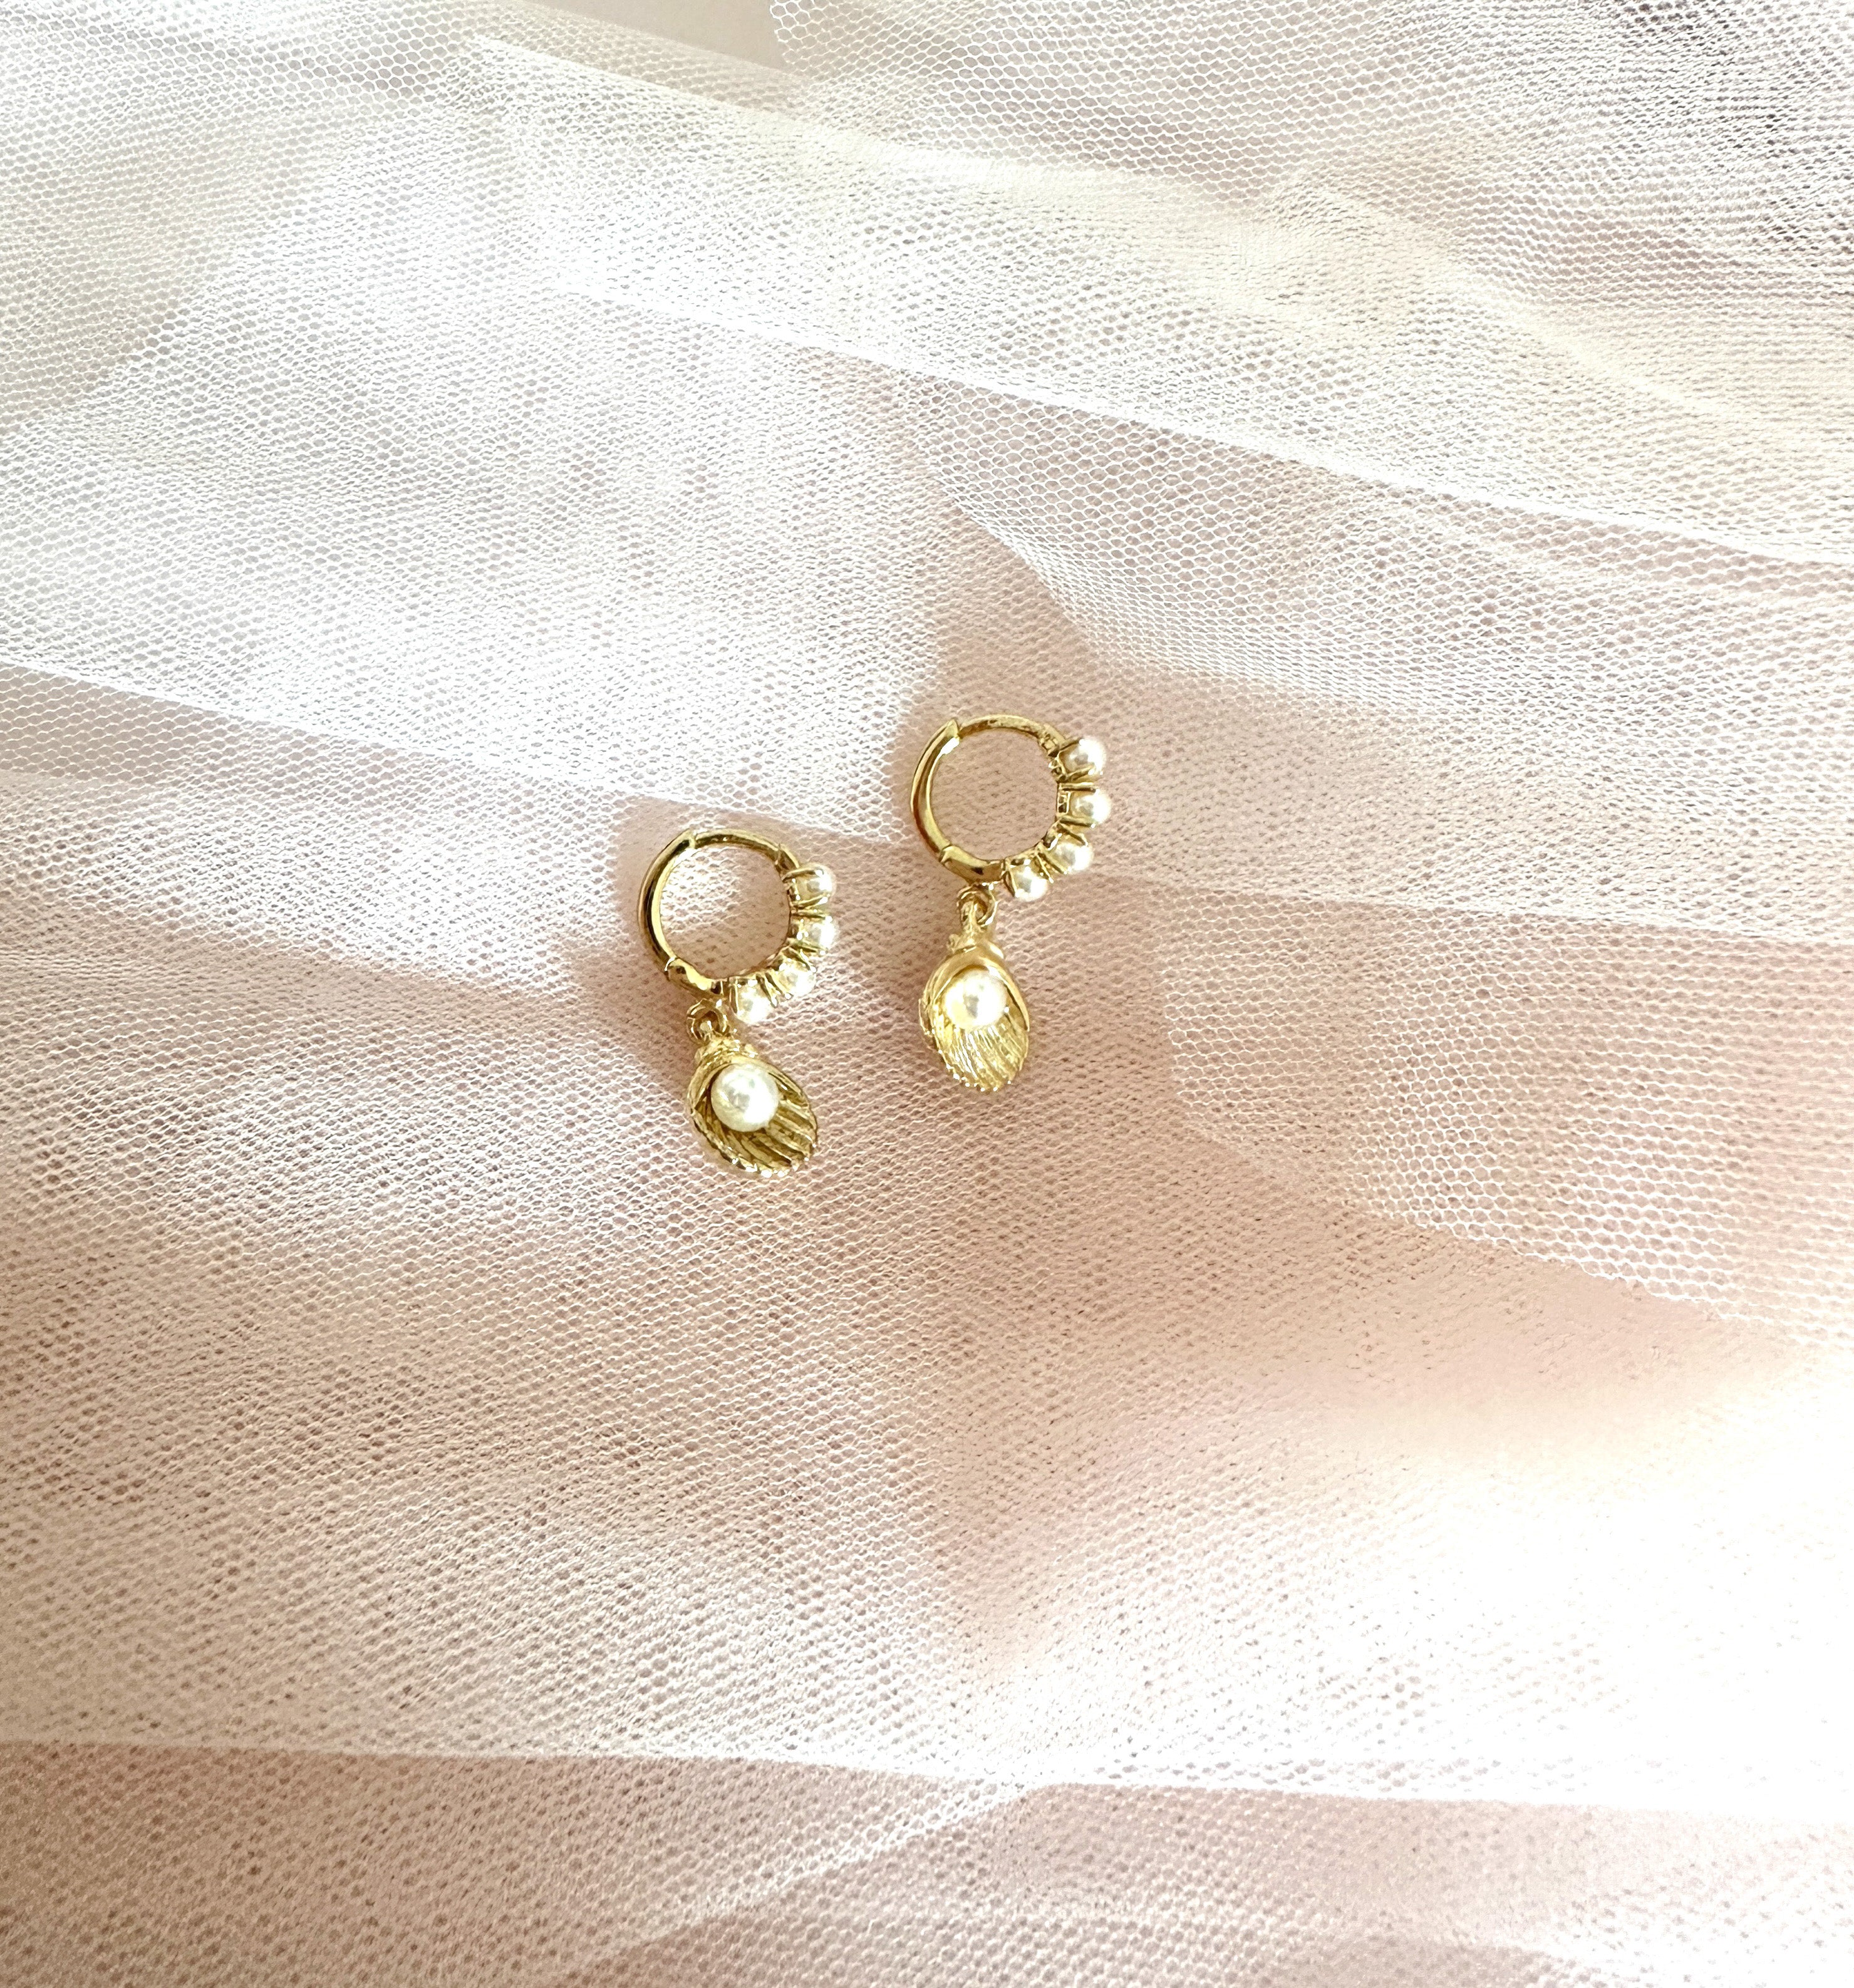 The “Petite Pearl” Seashell Earrings